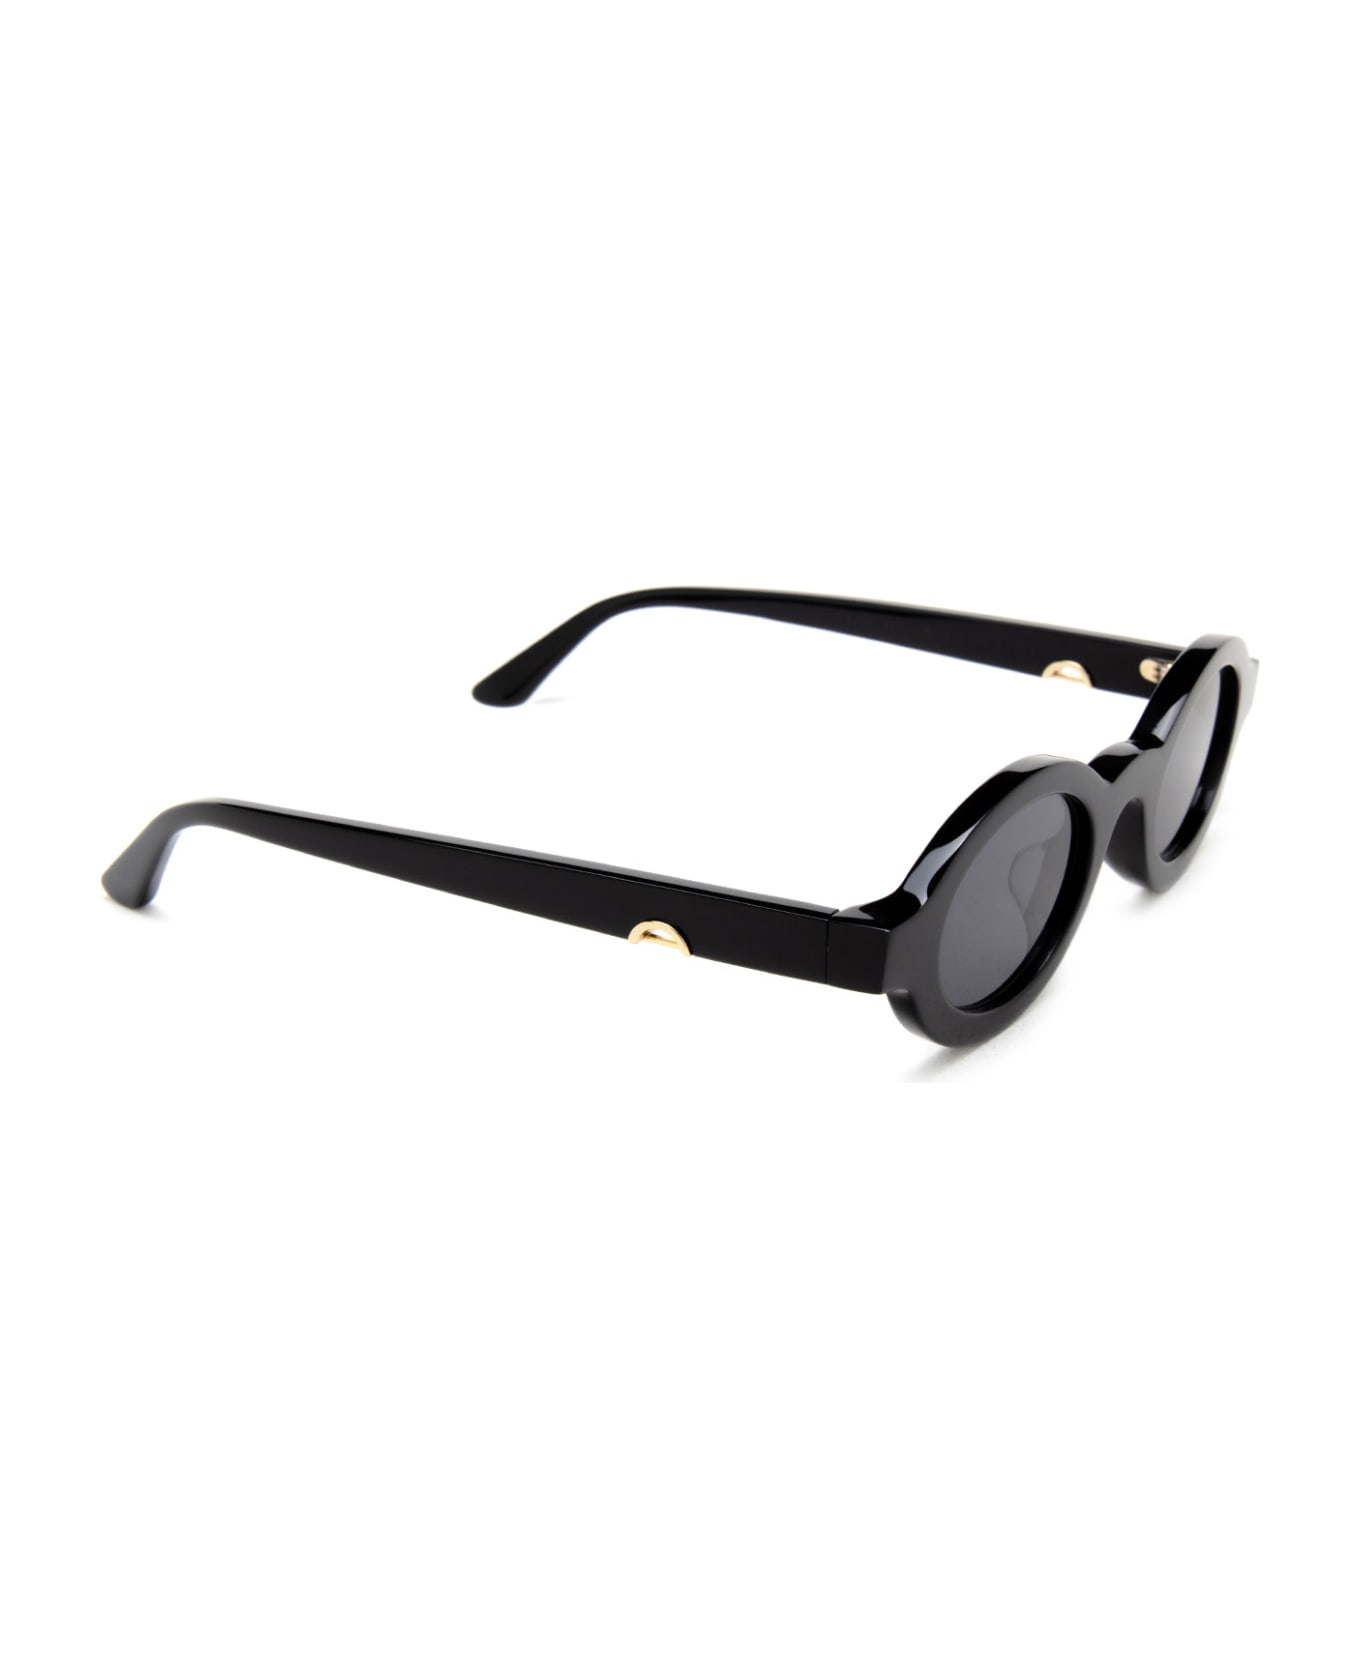 Huma Zoe Black Sunglasses - Black